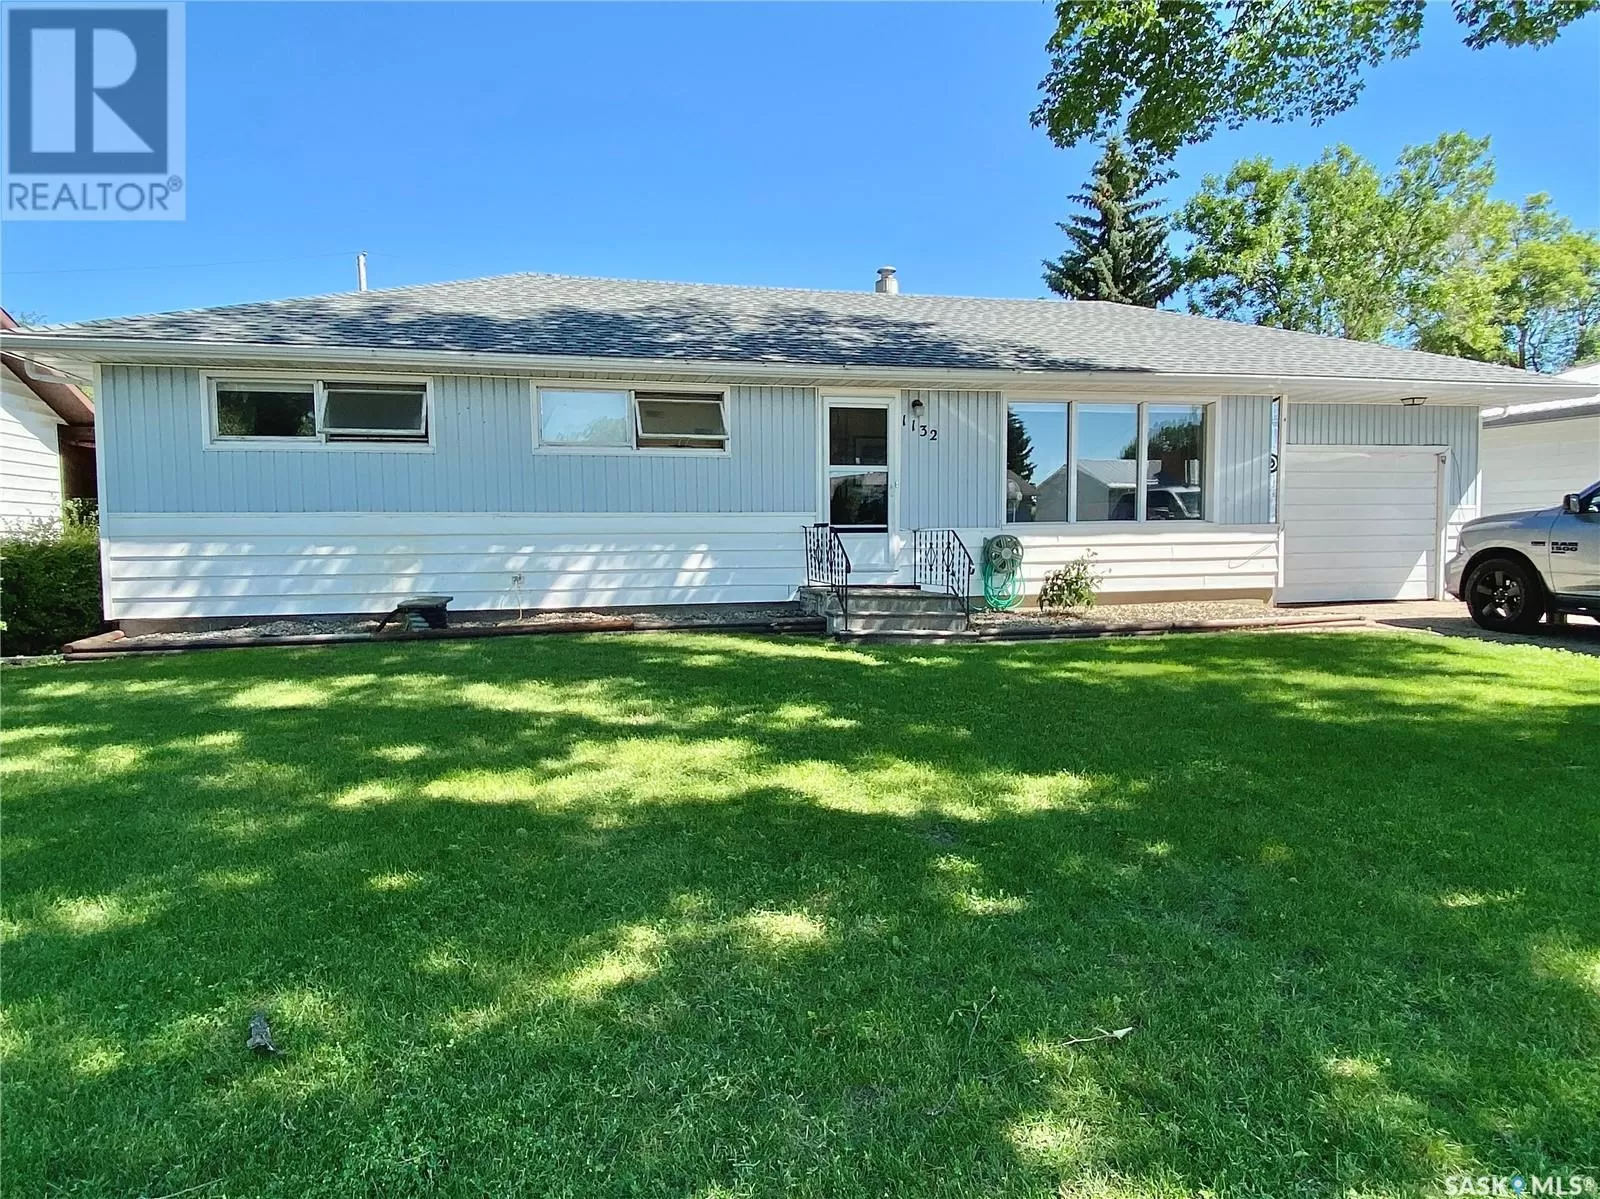 House for rent: 1132 Broadview Road, Esterhazy, Saskatchewan S0A 0X0